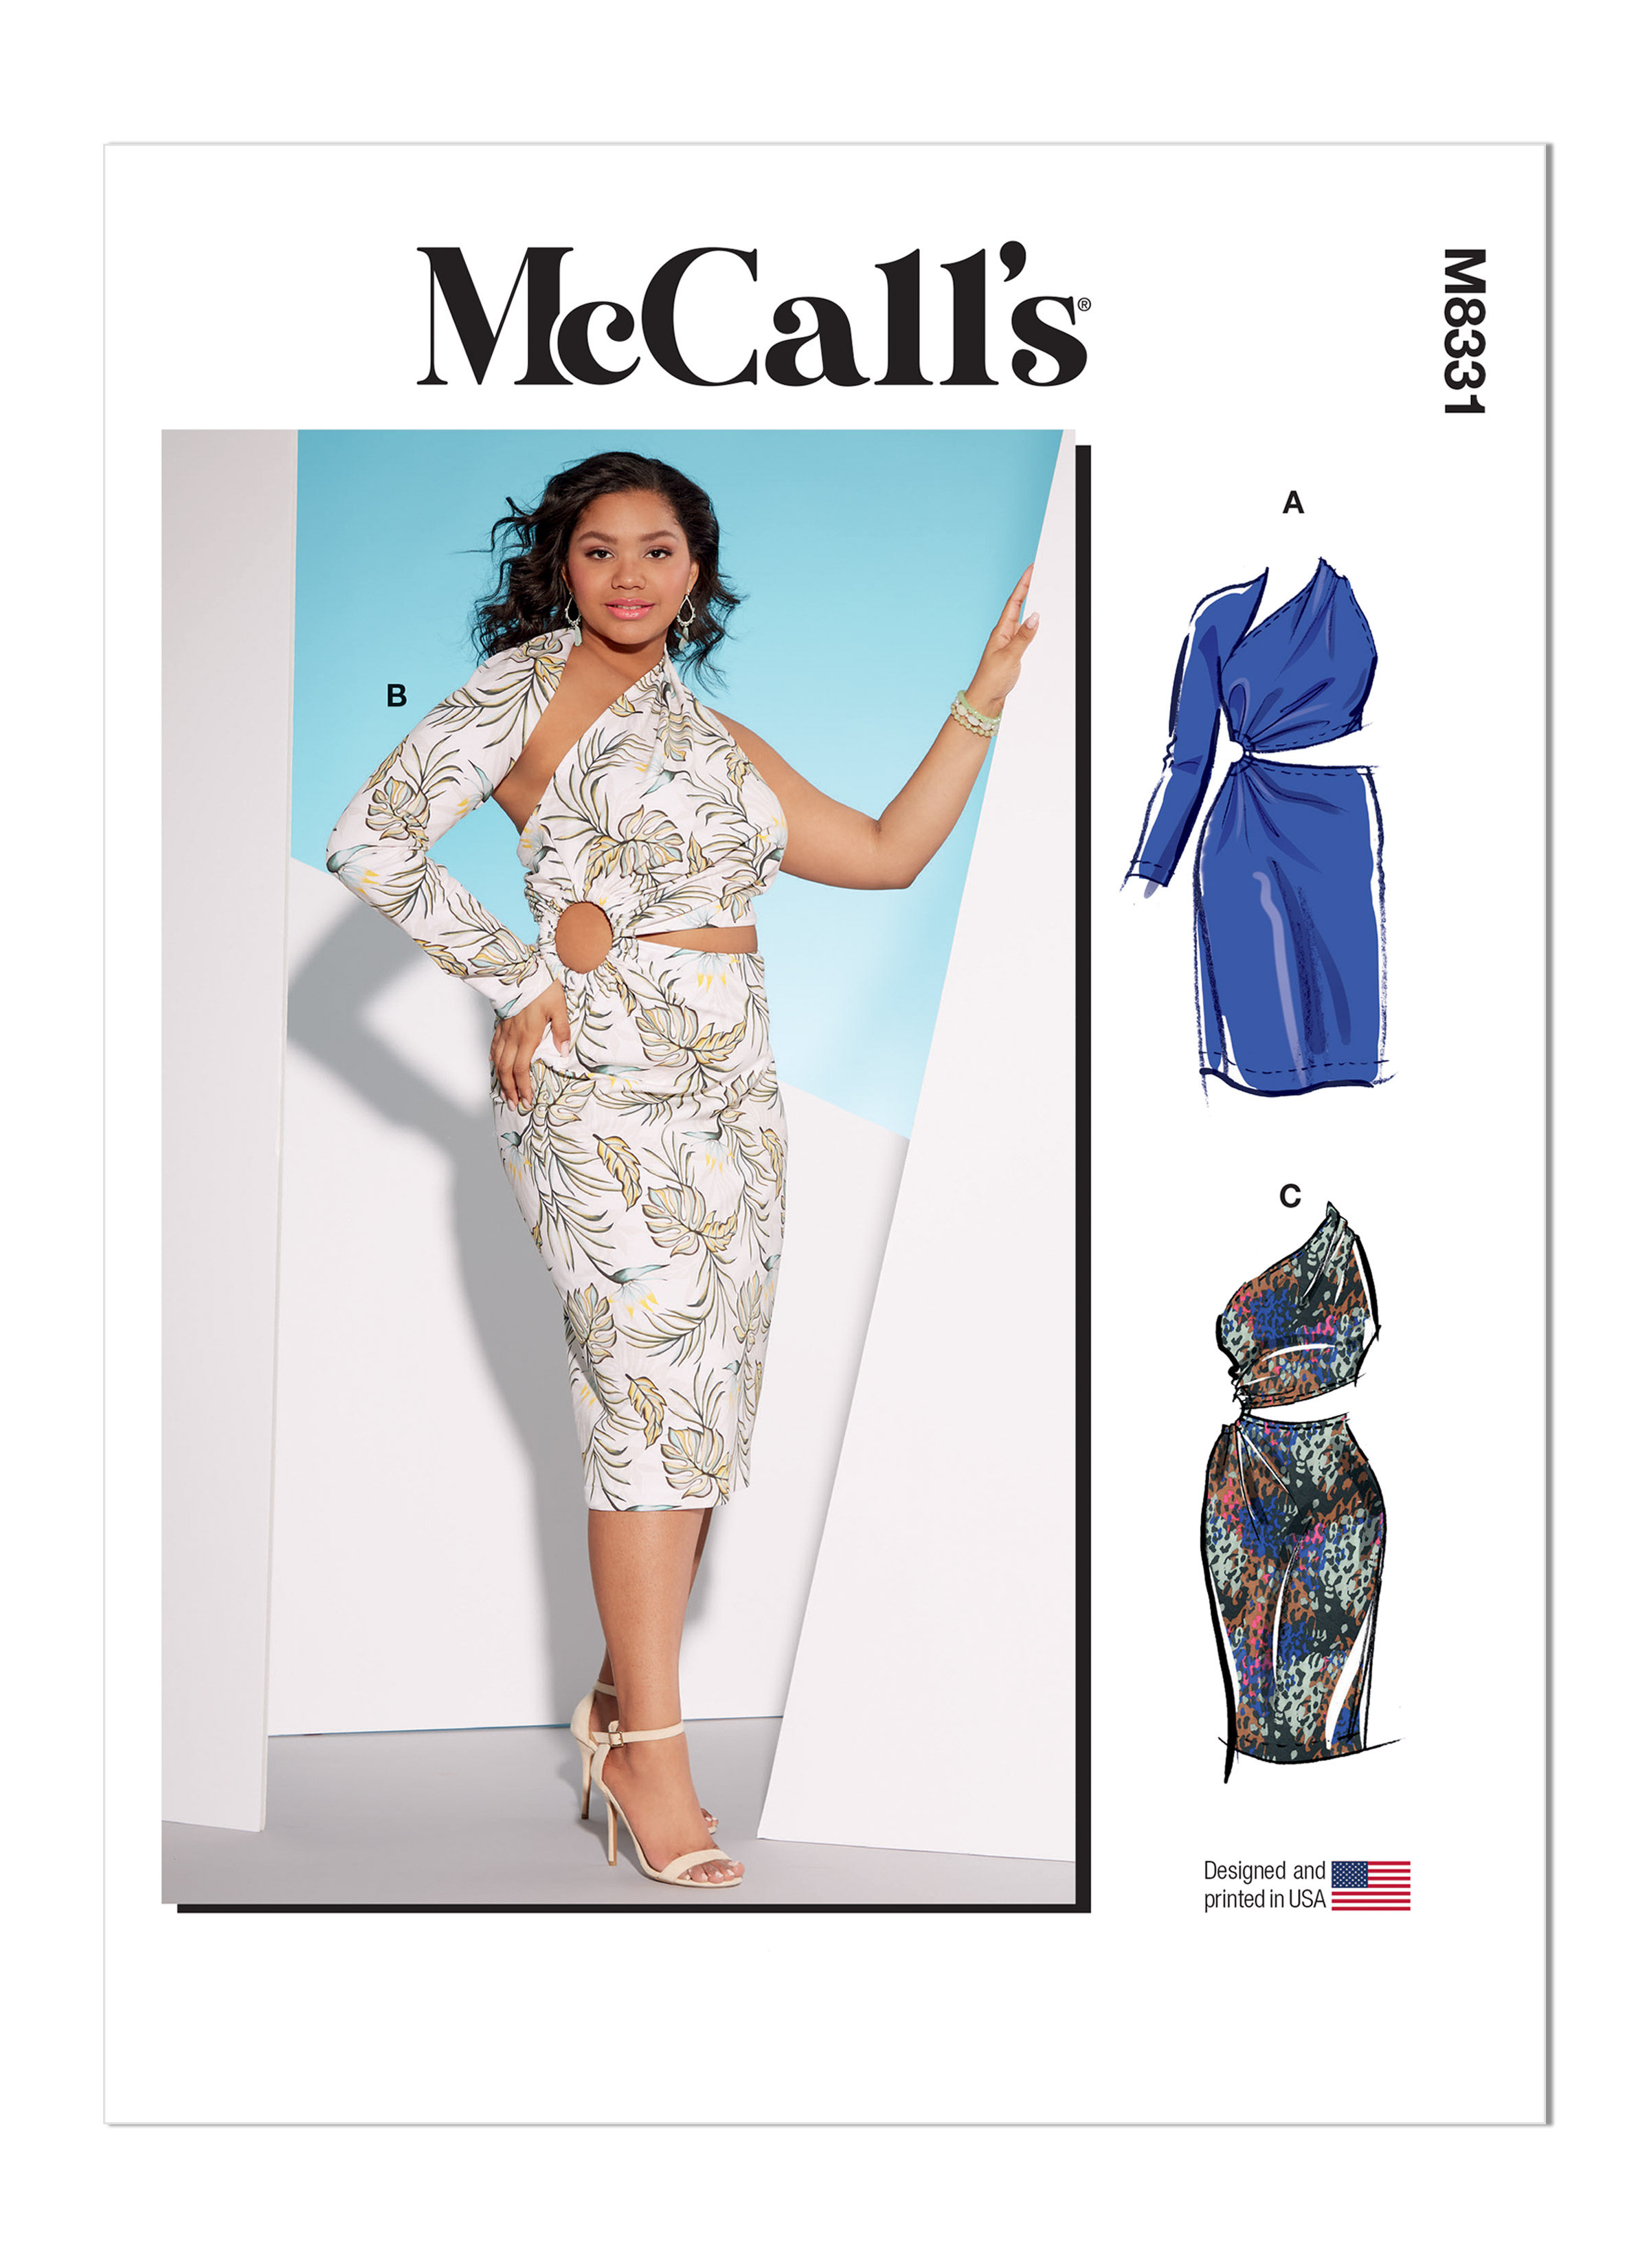 McCalls Patterns – The Dressmaker Fabrics